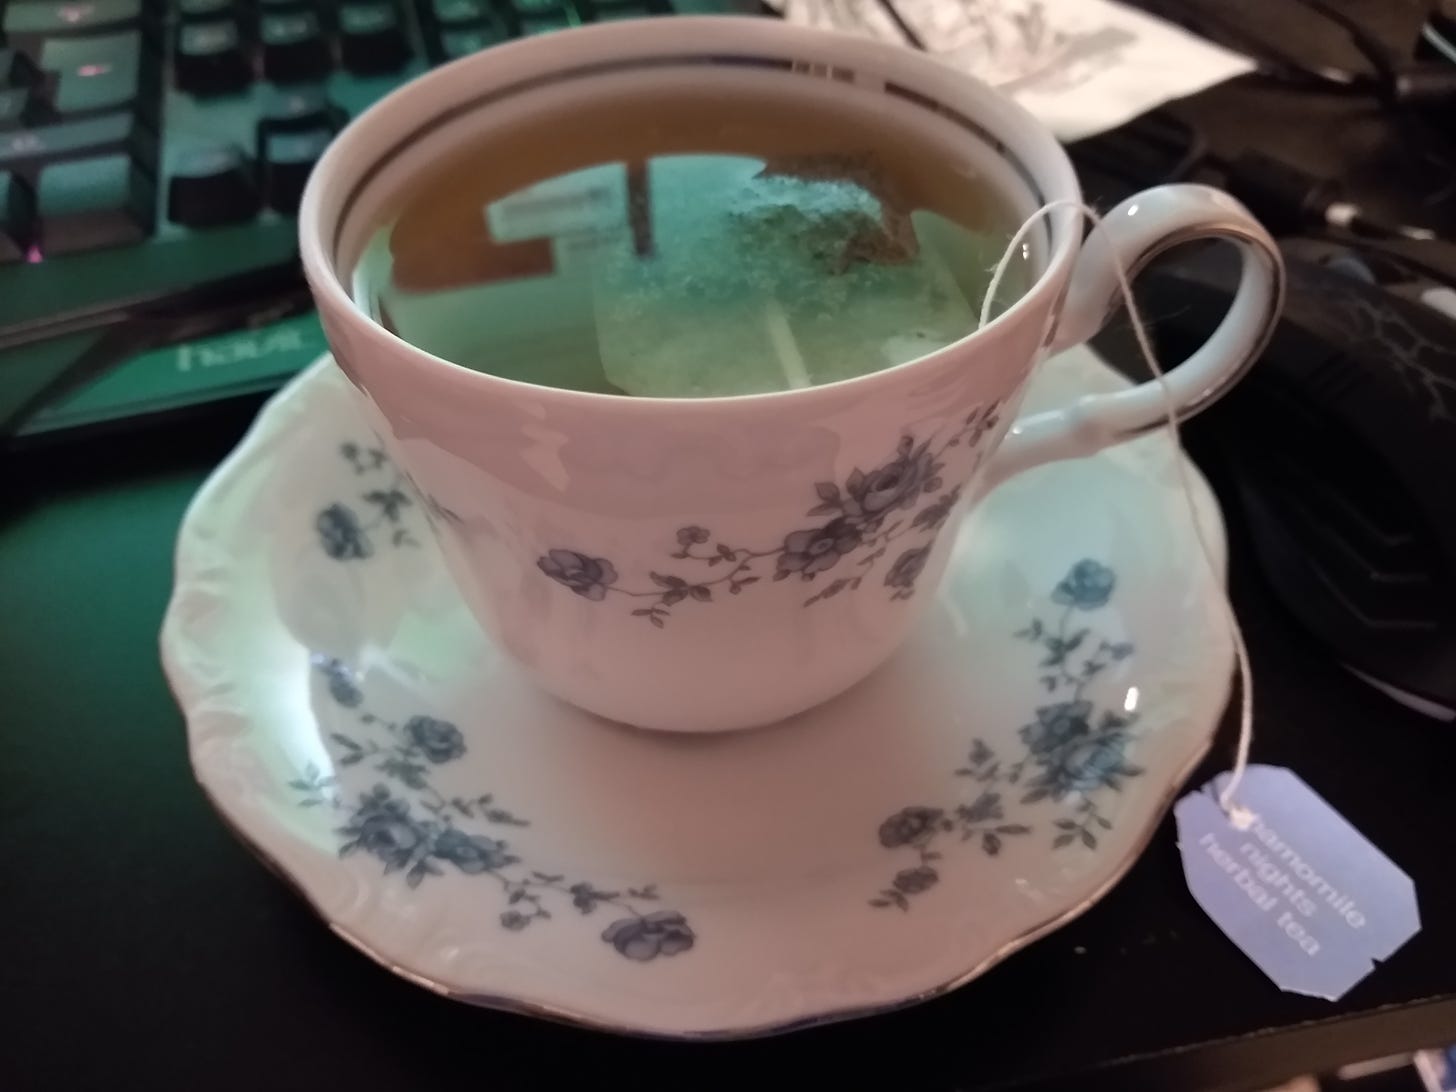 Teacup of Chamomile Nights herbal tea, on a saucer